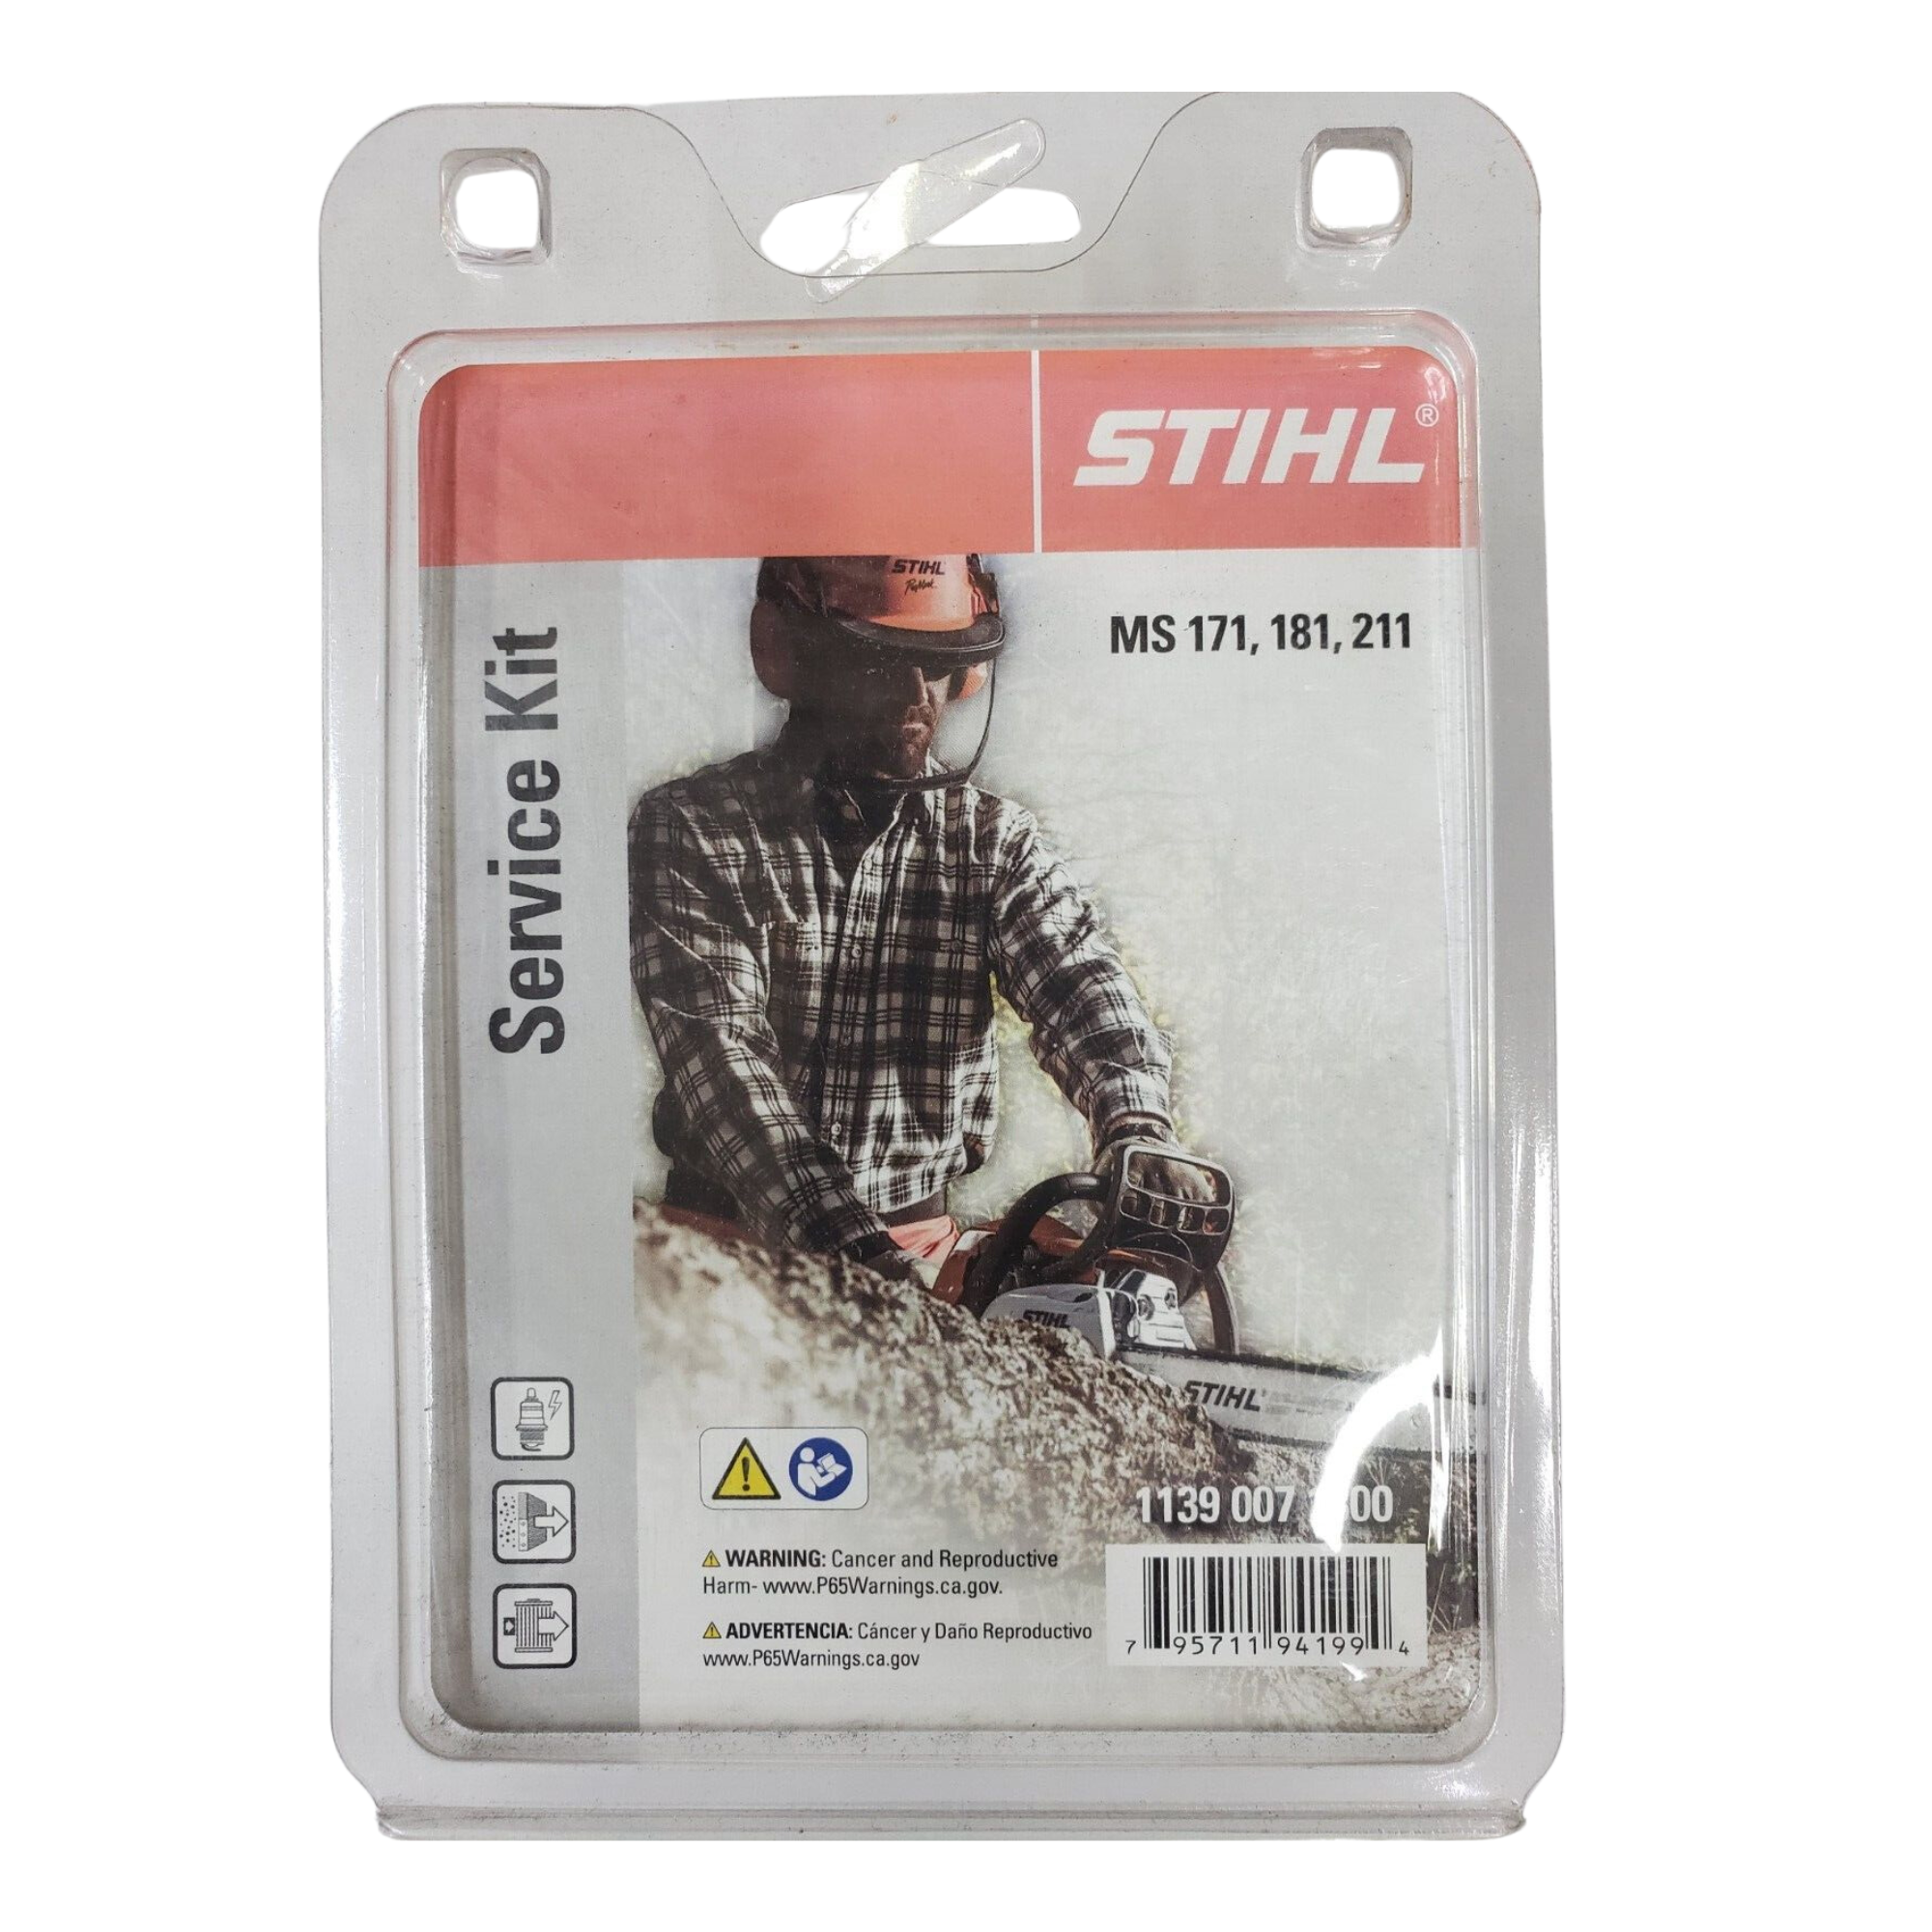 STIHL Chainsaw Service Kit 1139 Series | 1139 007 1800